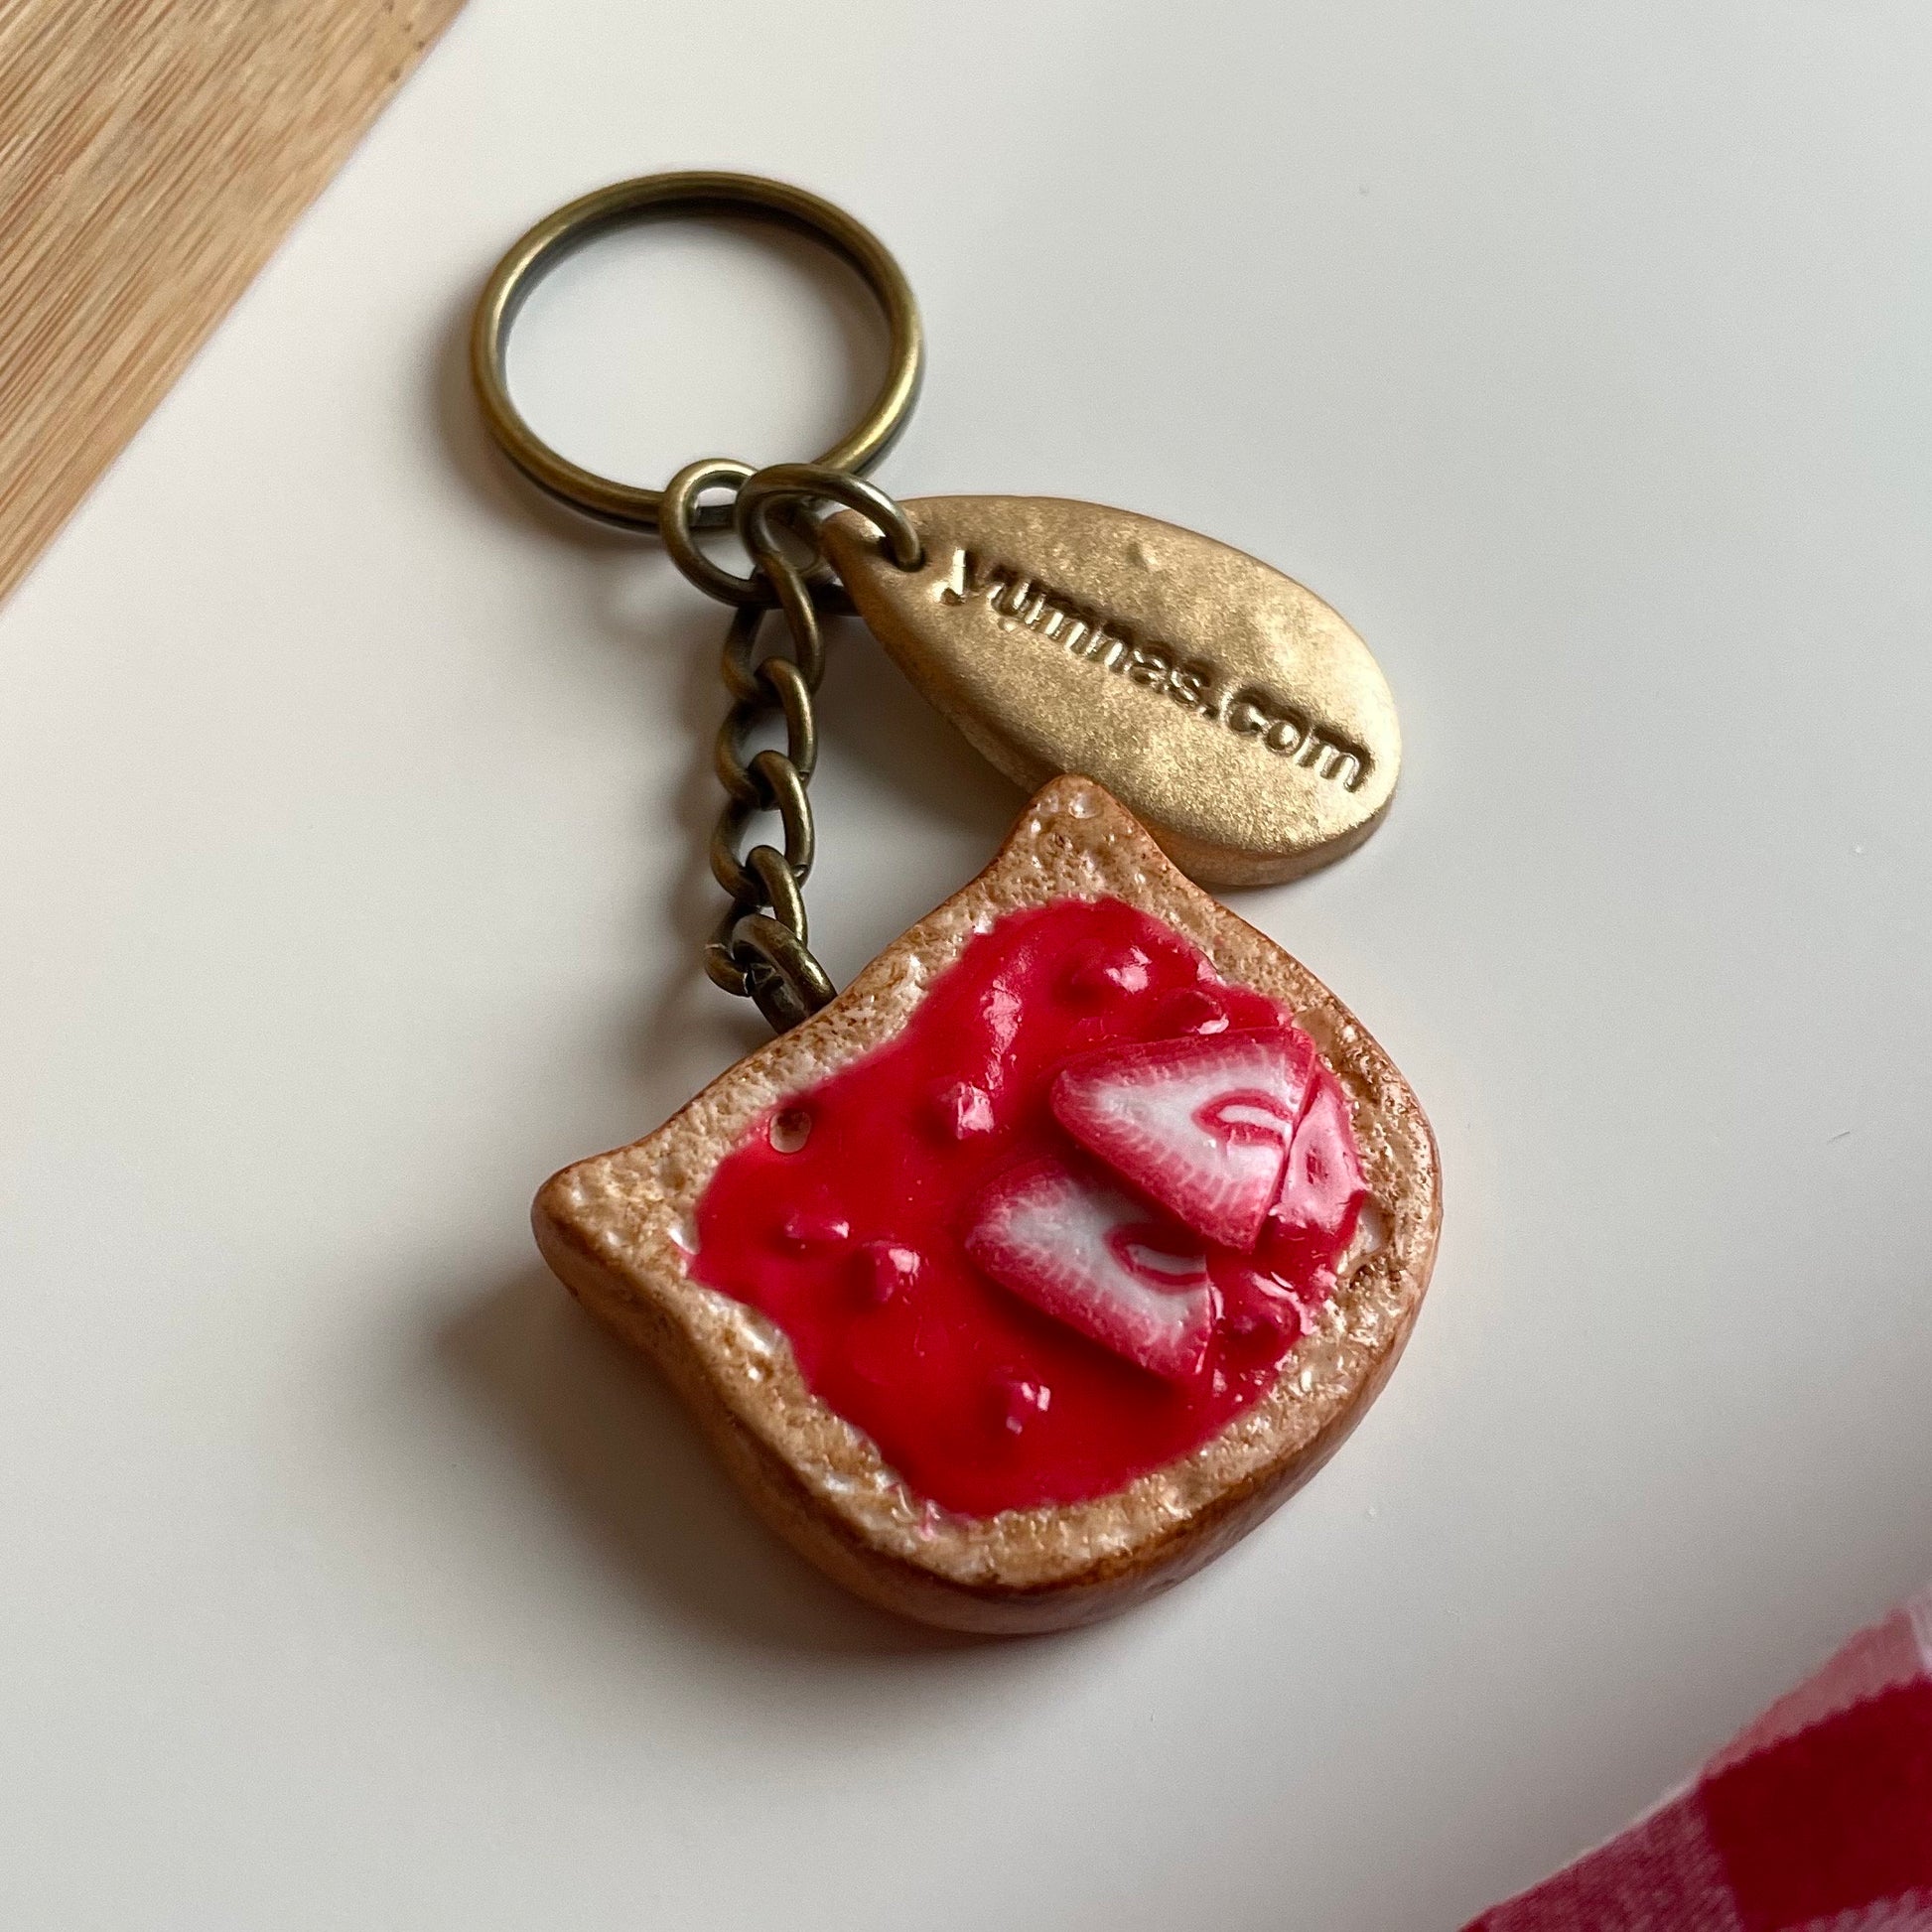 Bread toast keychain, strawberry jam on toast keychain, jam toast keyring, strawberry polymerclay charm, clay keyring, realistic food charm